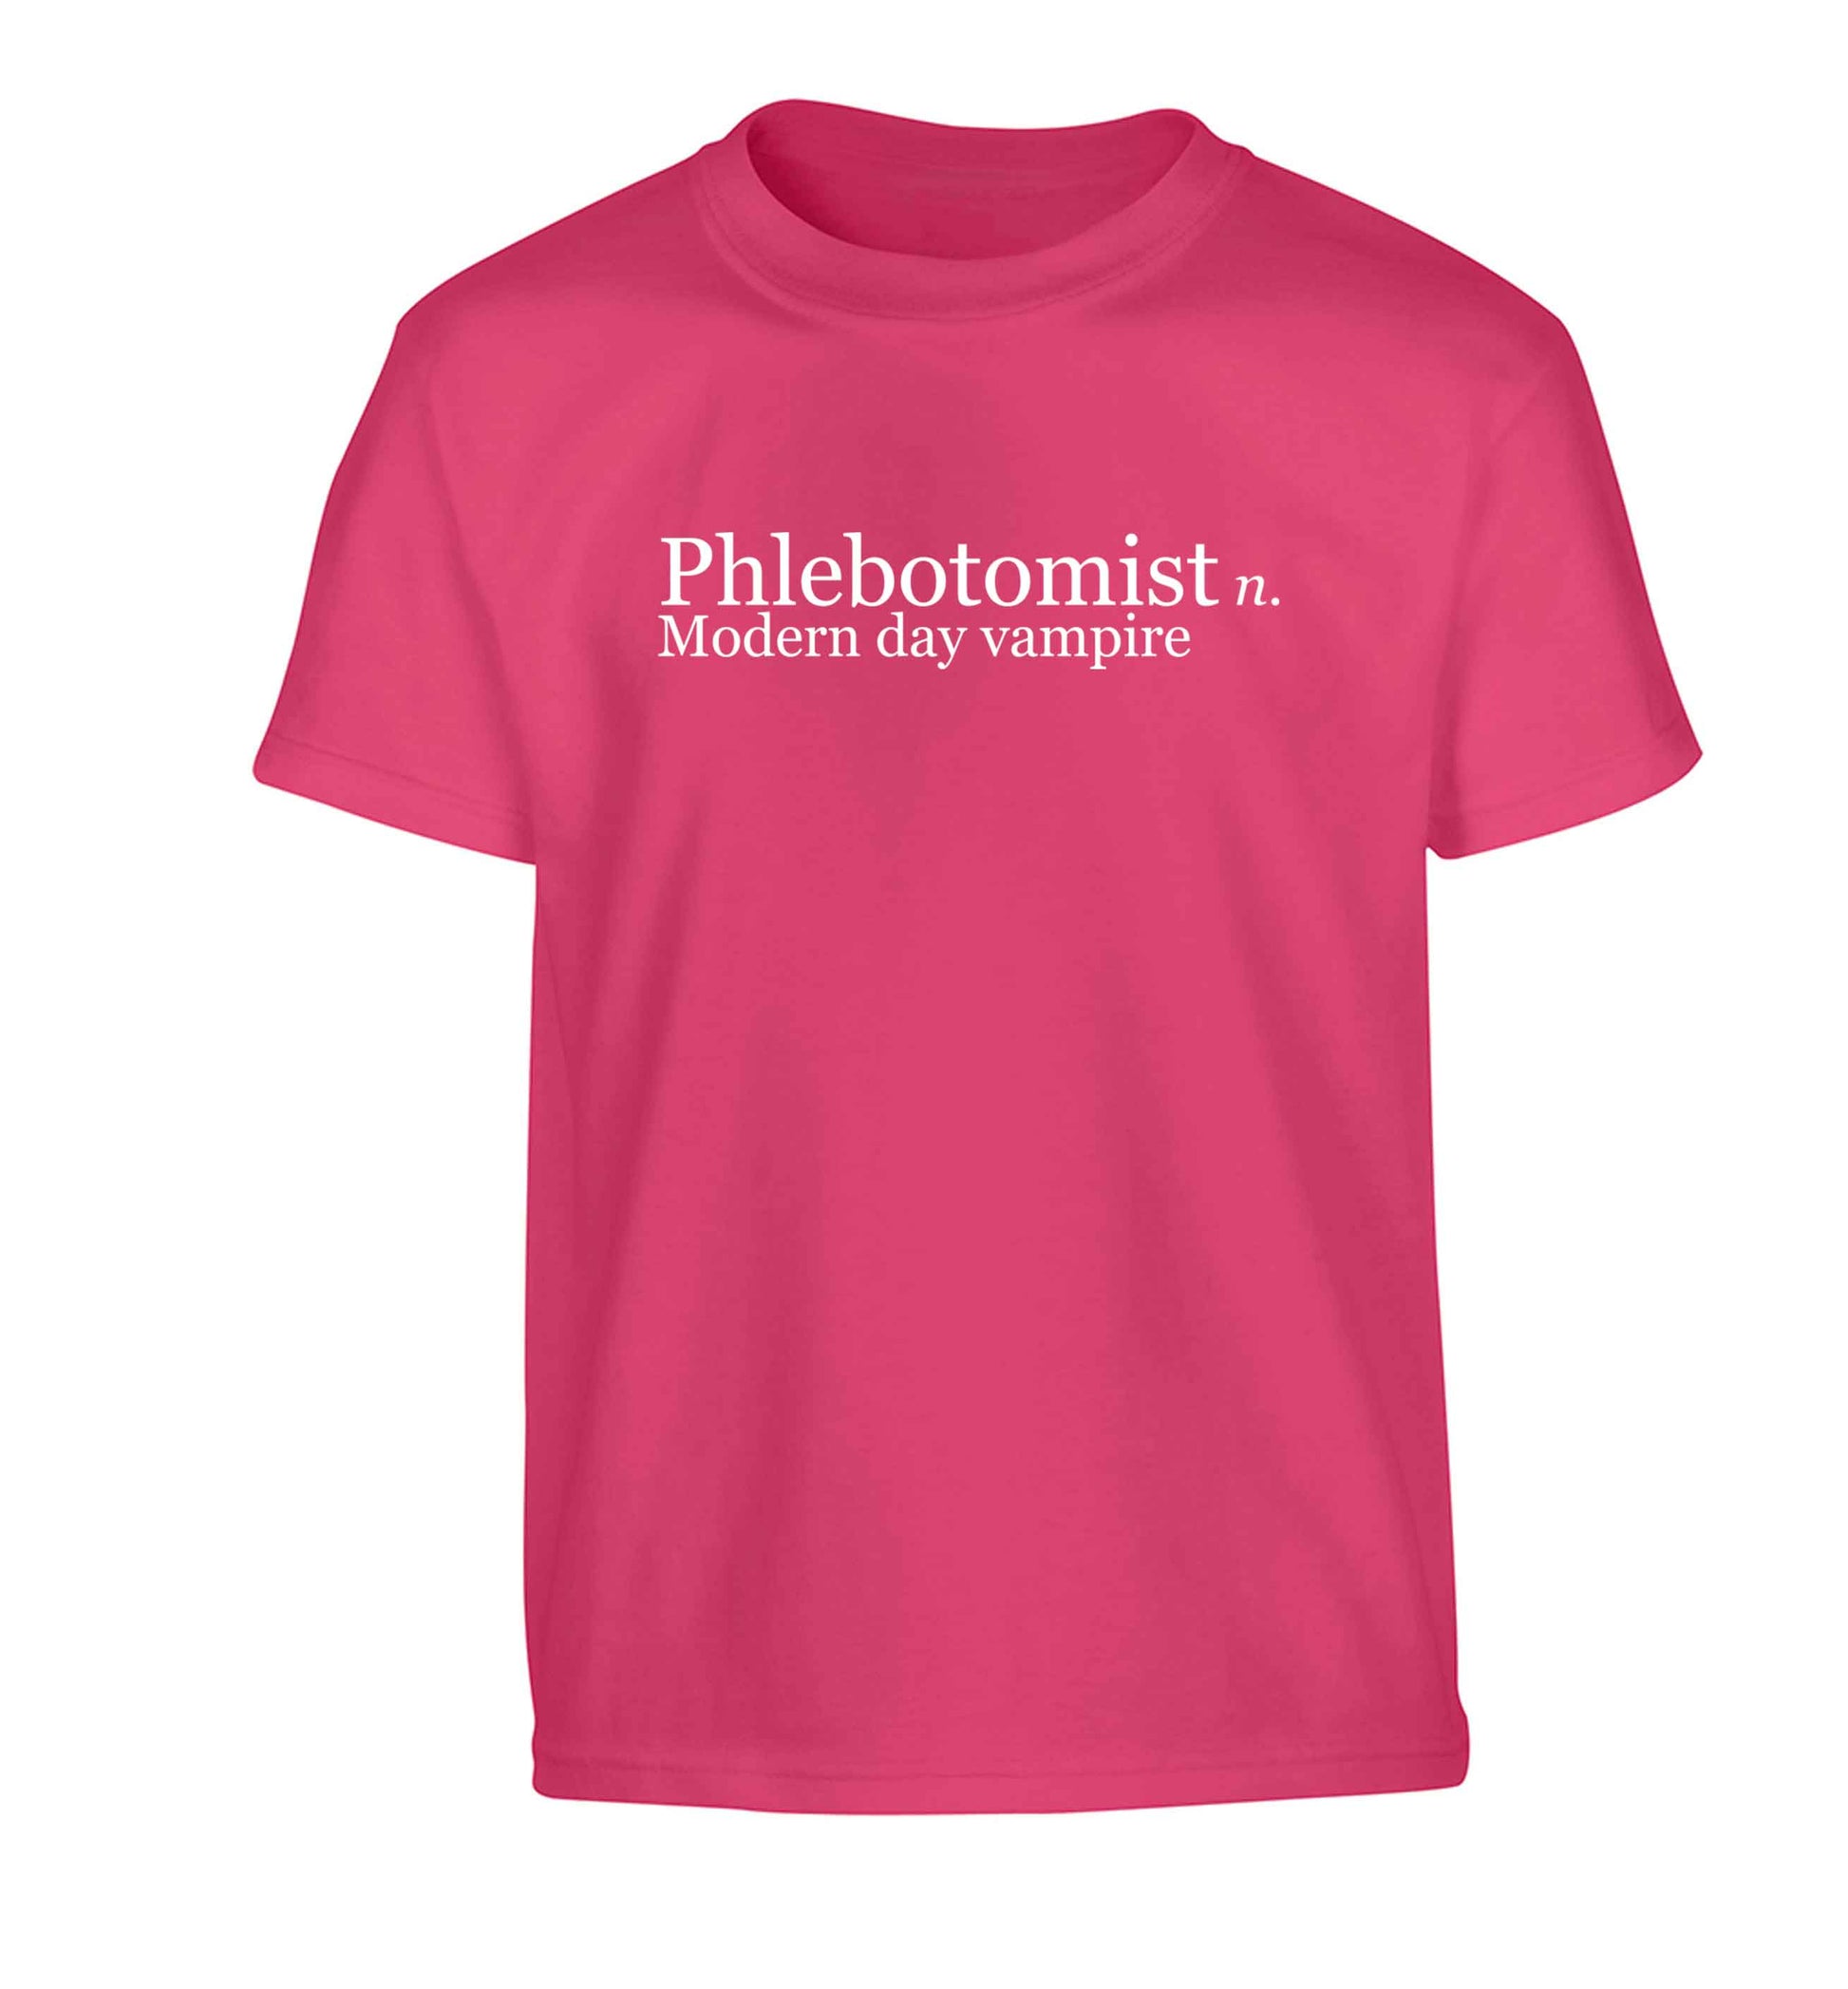 Phlebotomist - Modern day vampire Children's pink Tshirt 12-13 Years